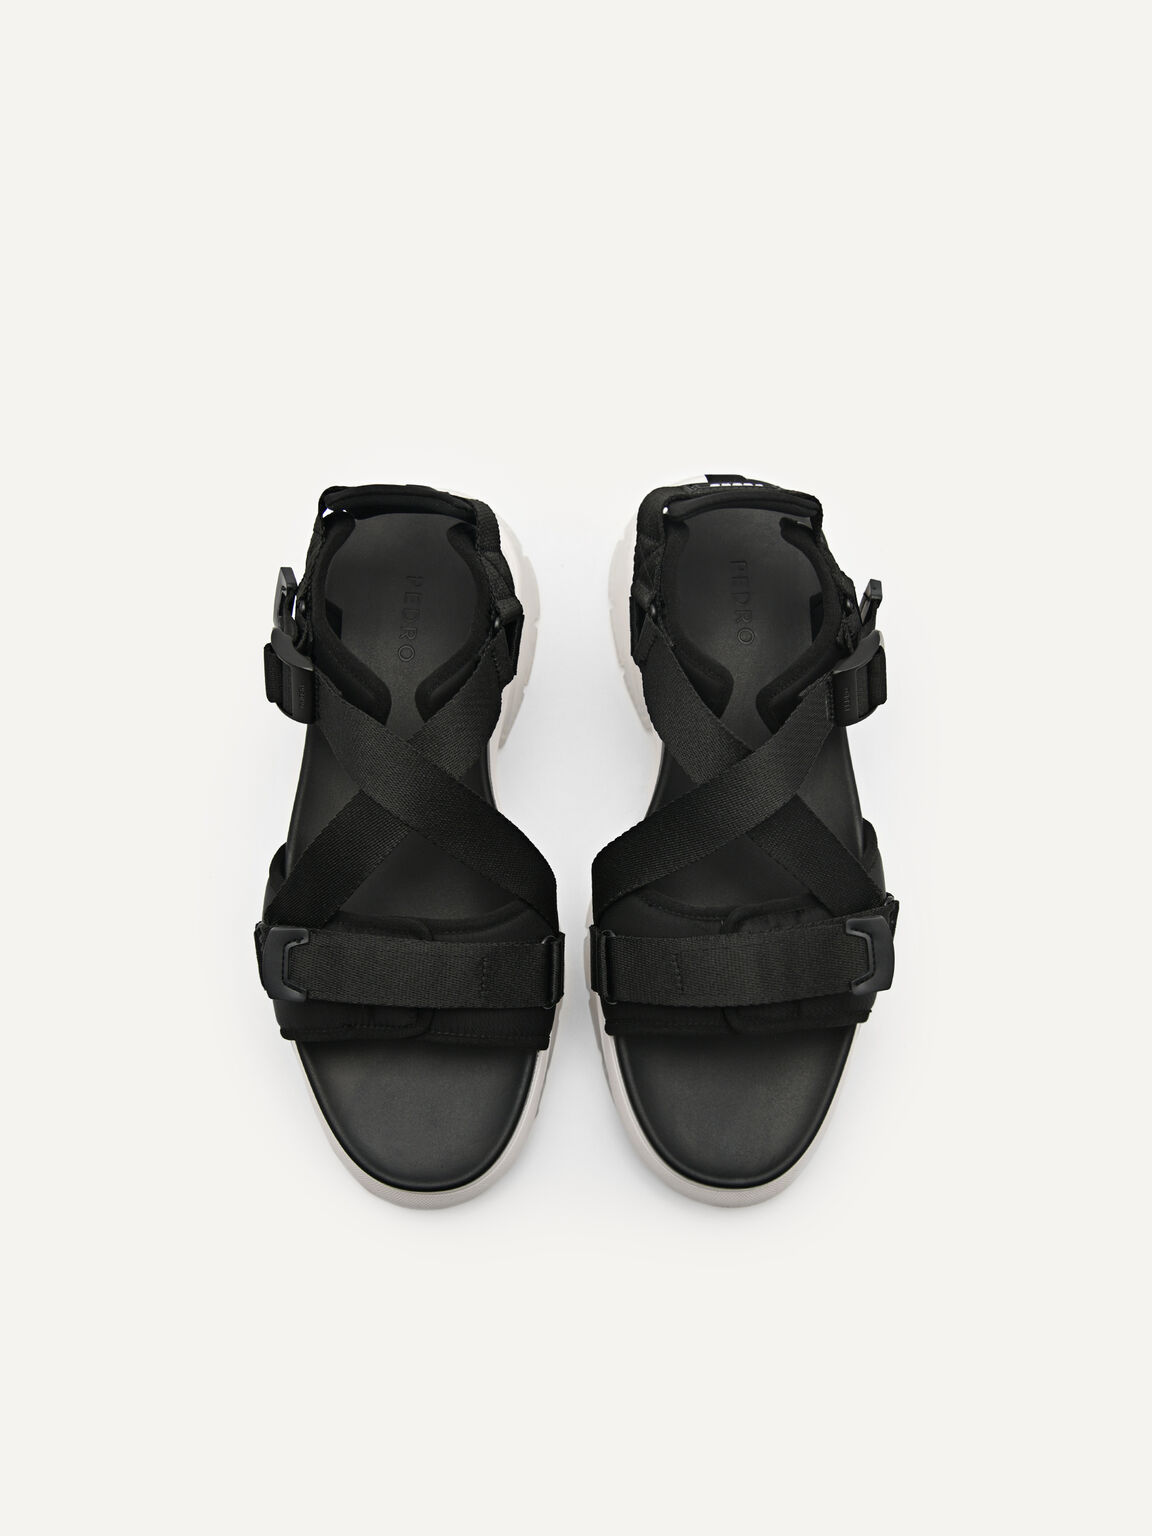 Hybrix Sandals, Black